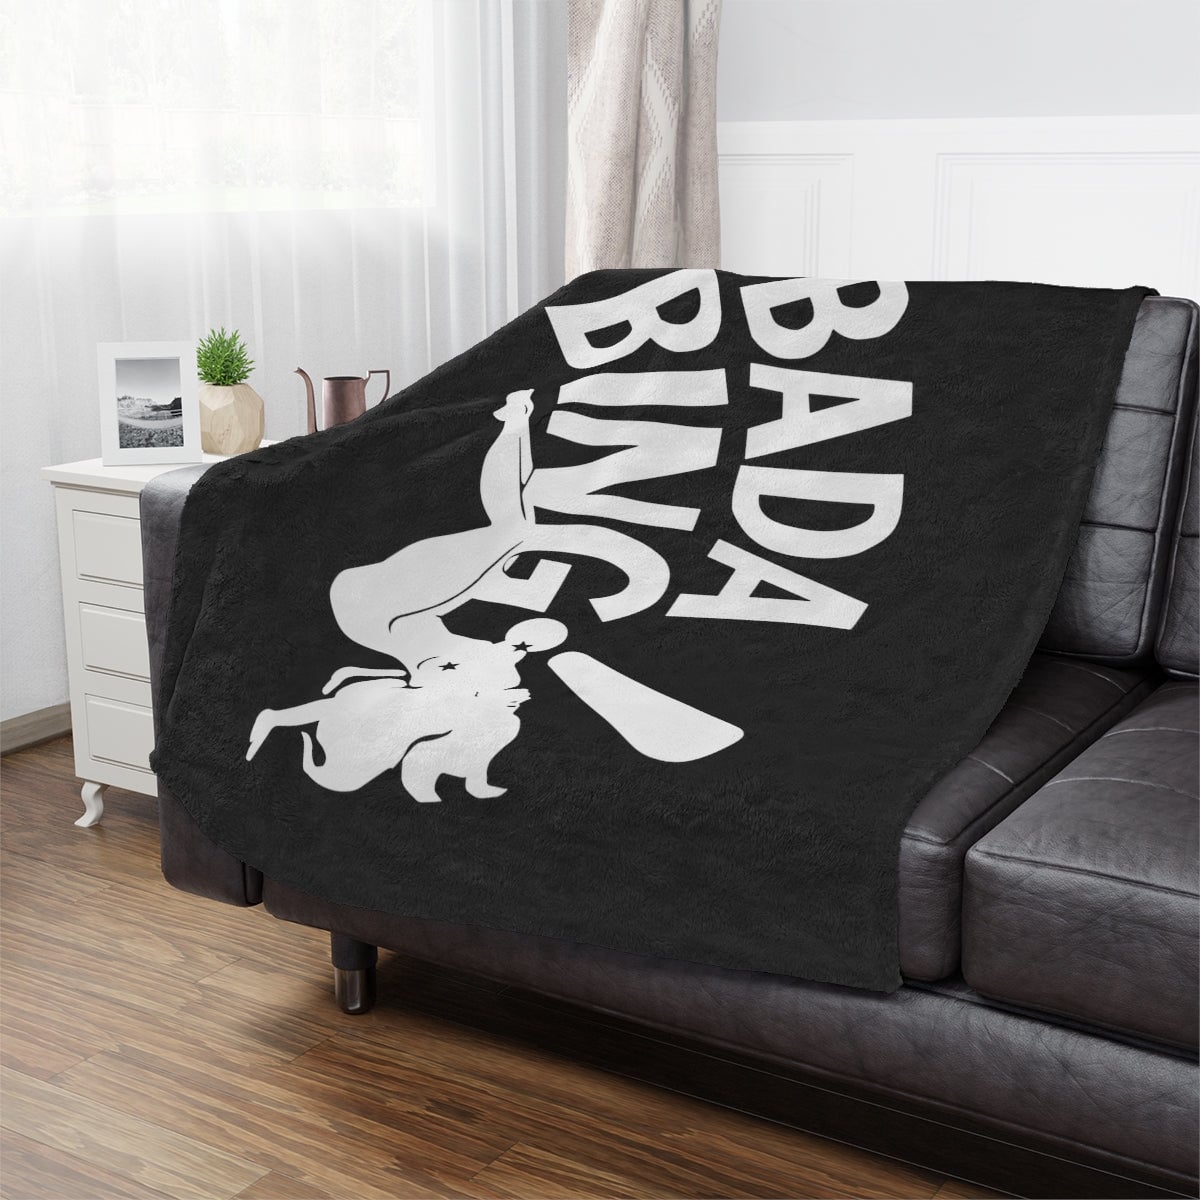 Mafia-Inspired Comfort - Bada Bing Mobsters Club Minky Blanket for Stylish Living